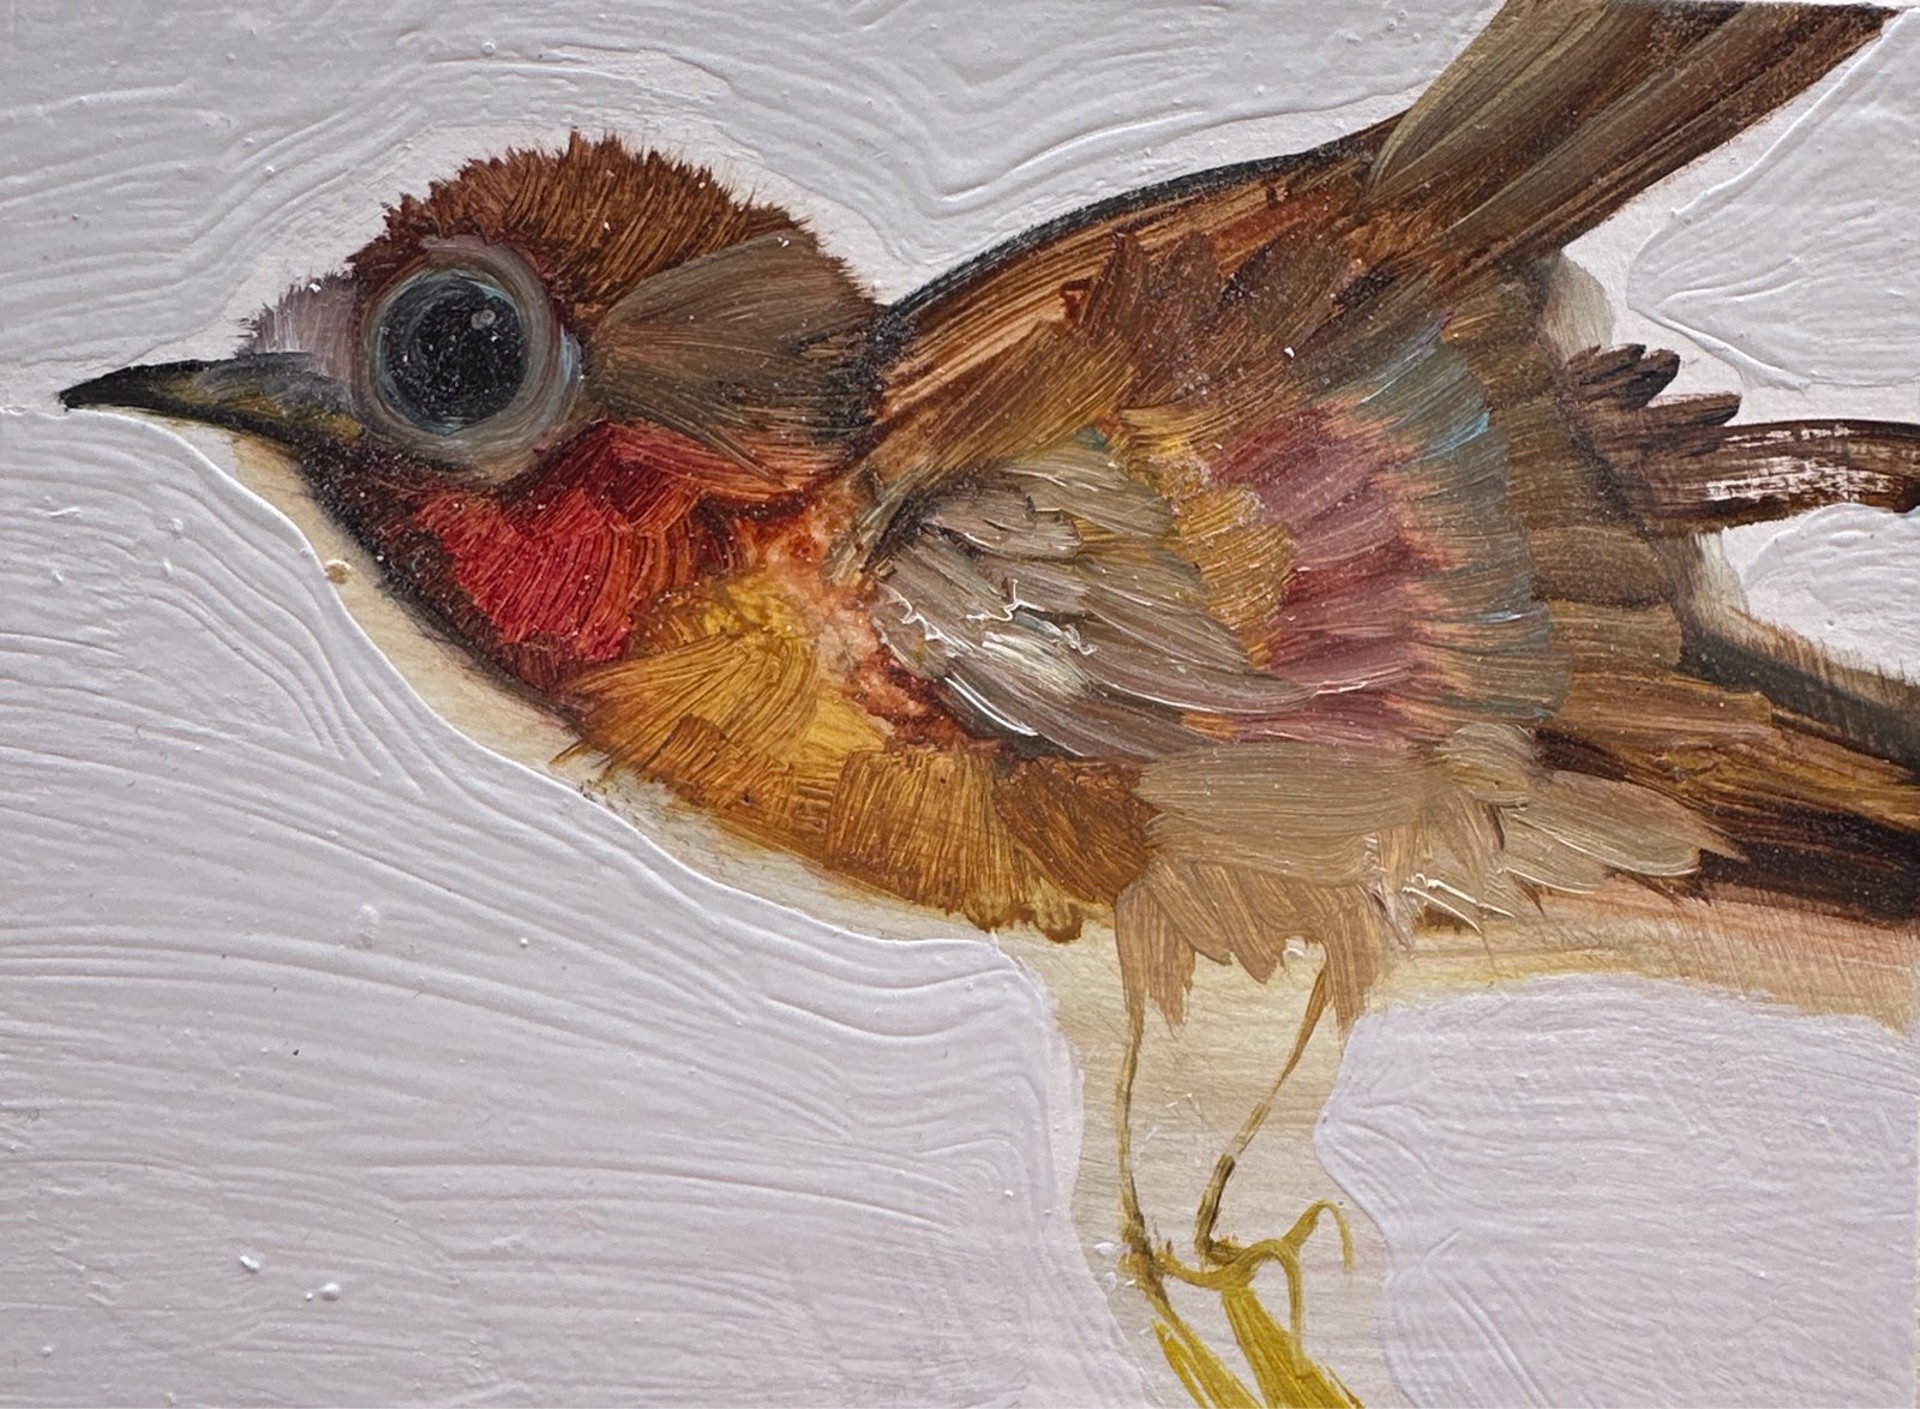 Large Bird Block by Diane Kilgore Condon